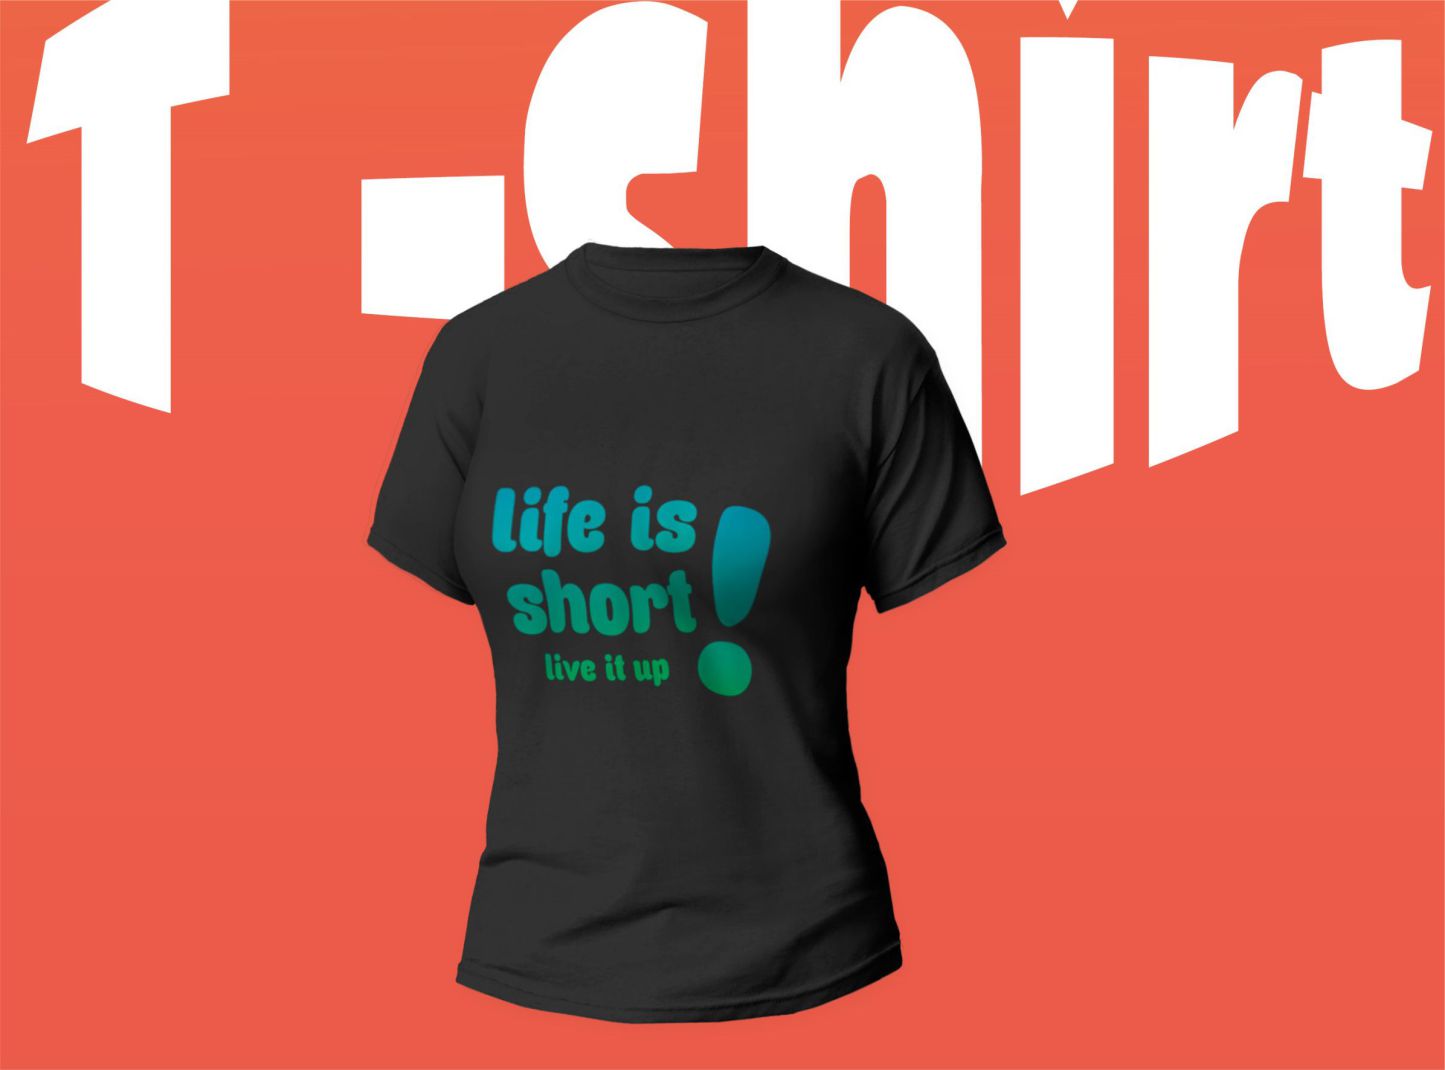 Branded tshirt printing & design in lagos nigeria